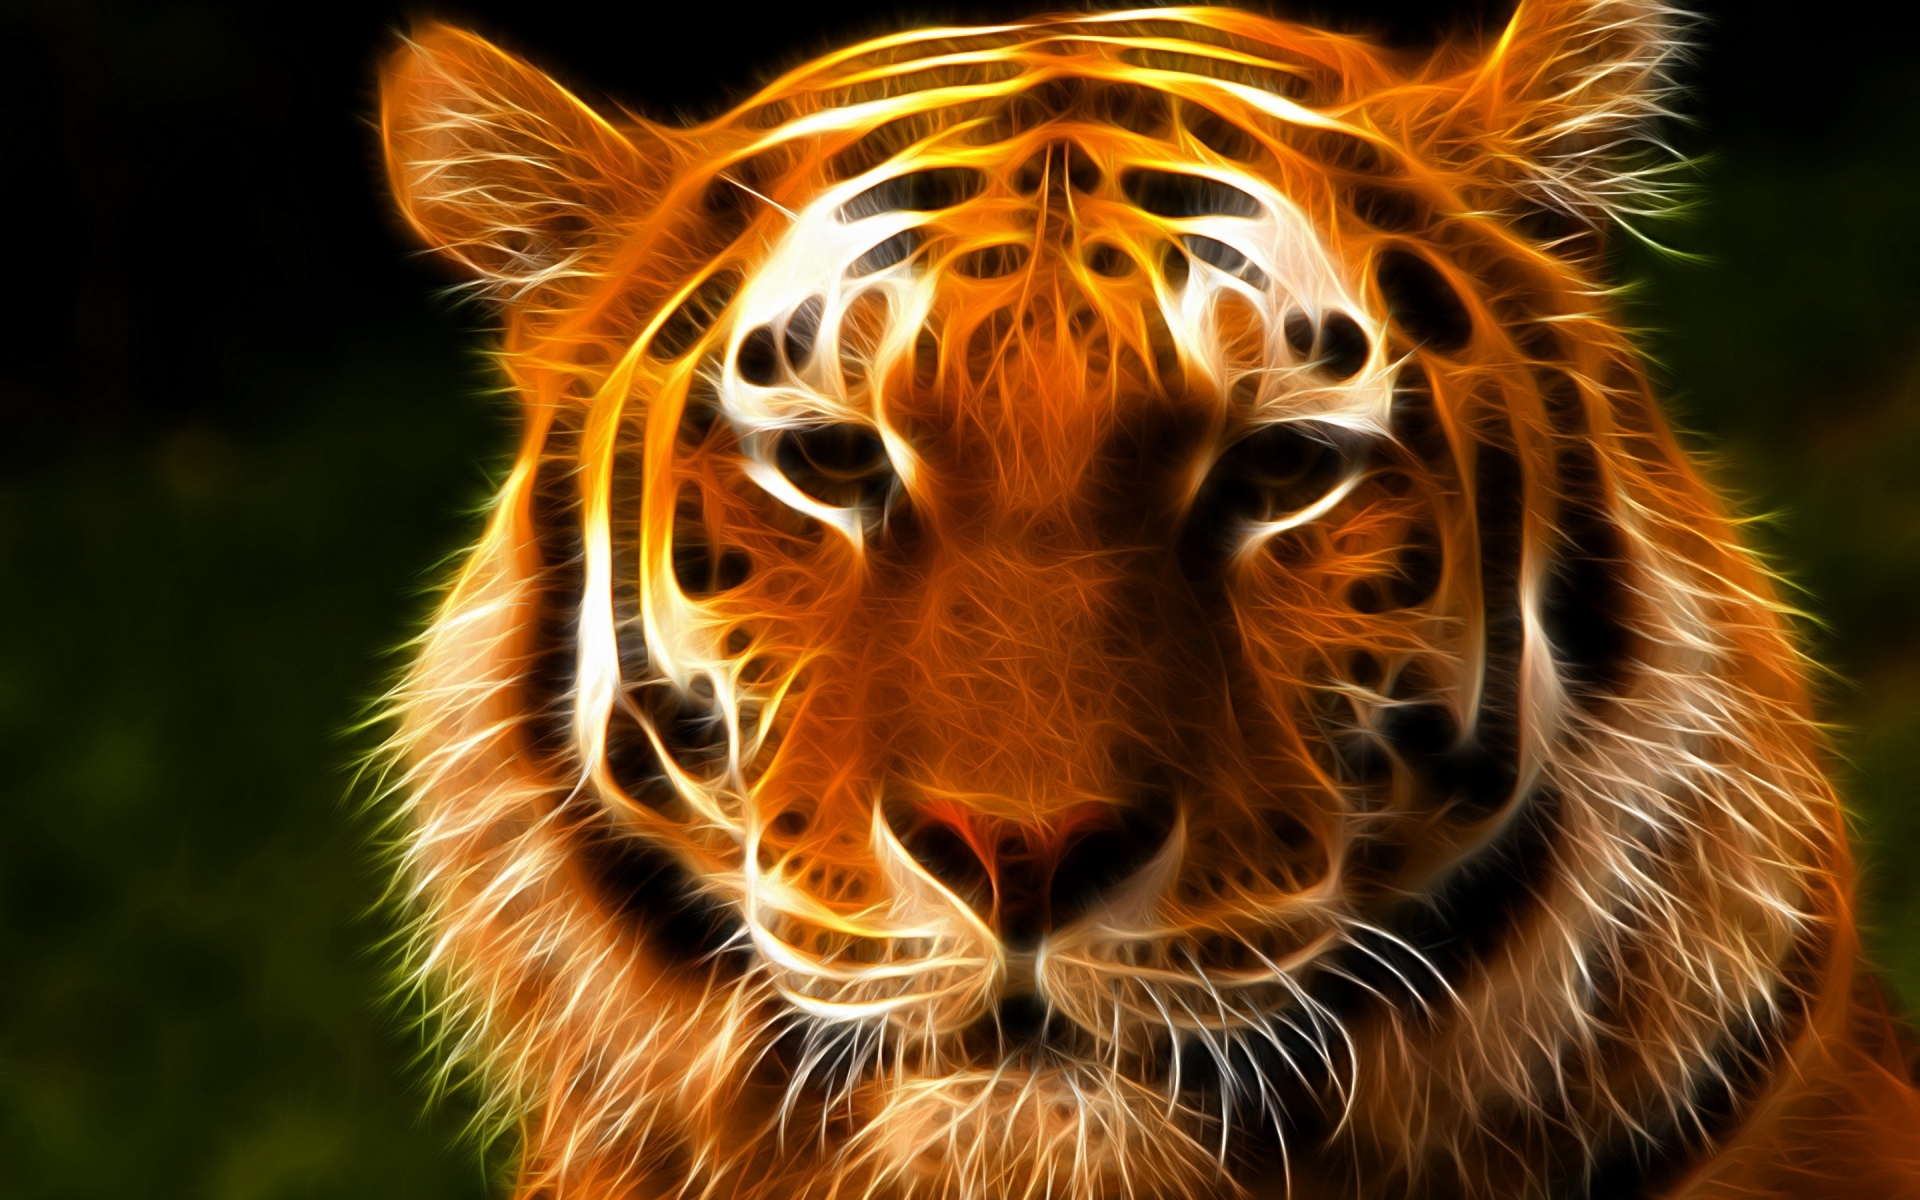 Tiger Face Art for 1920 x 1200 widescreen resolution